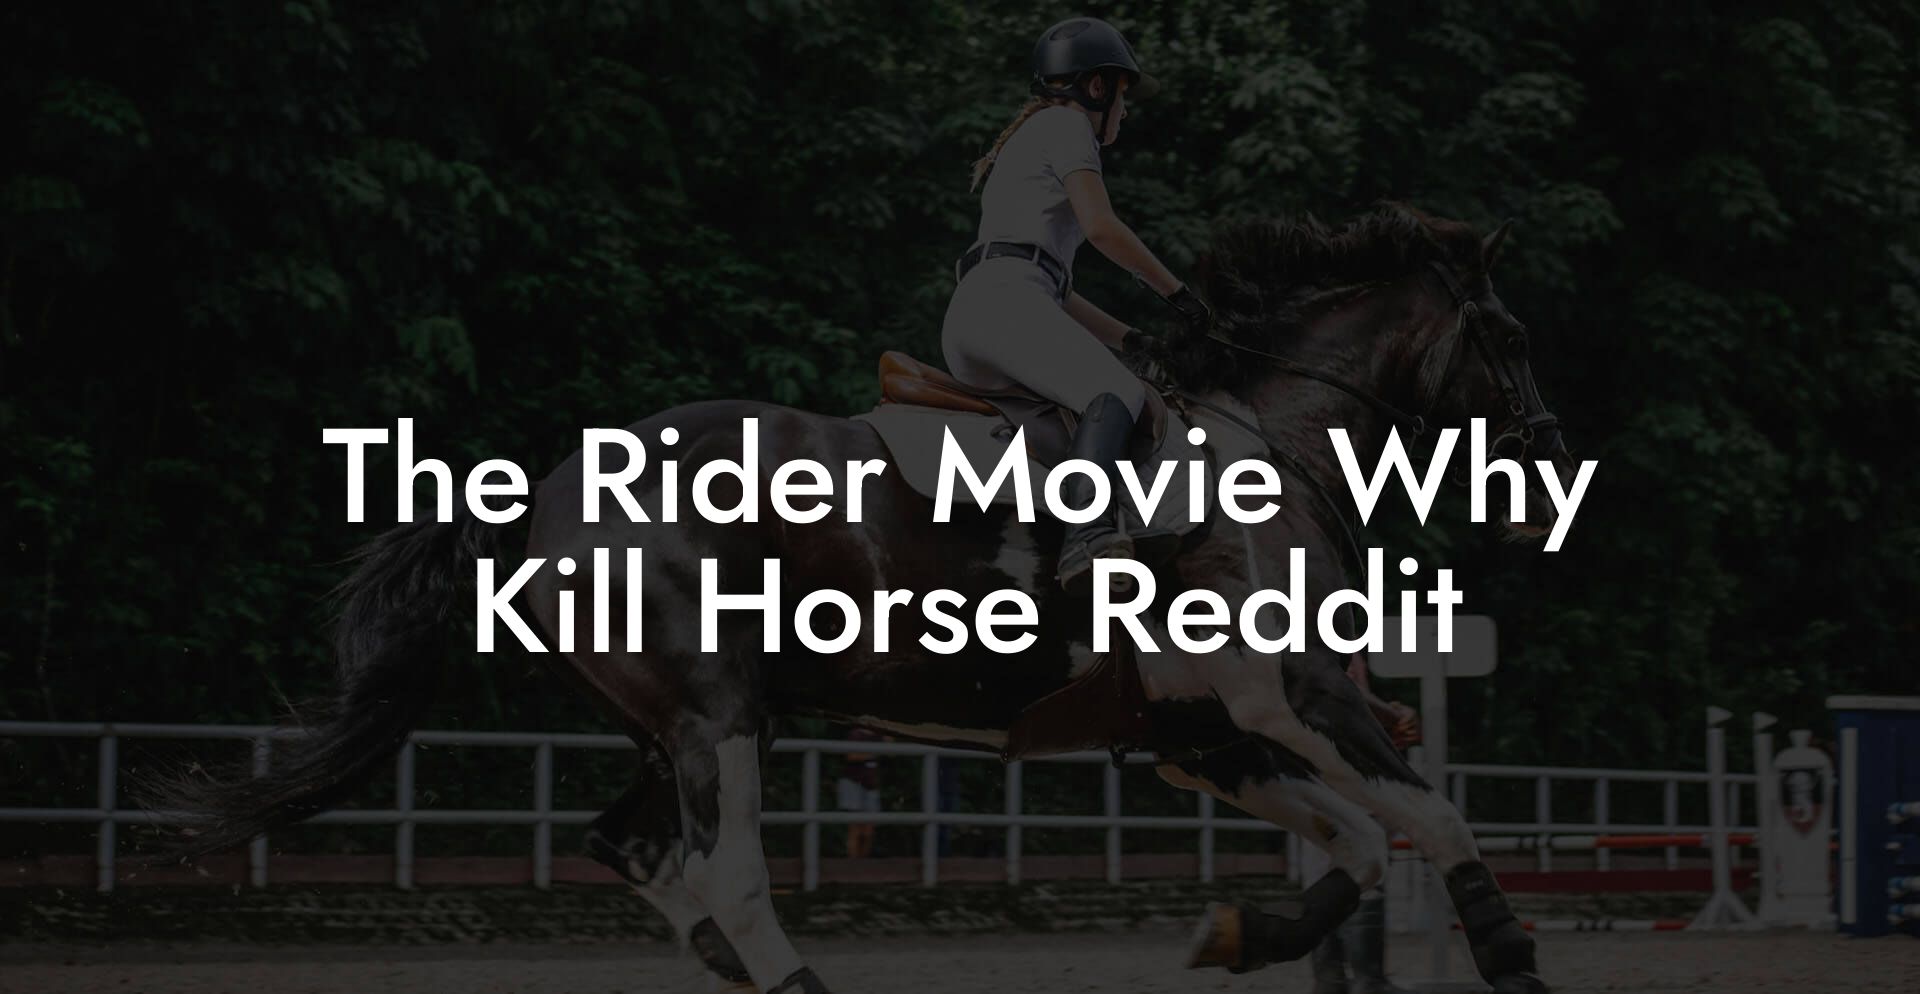 The Rider Movie Why Kill Horse Reddit